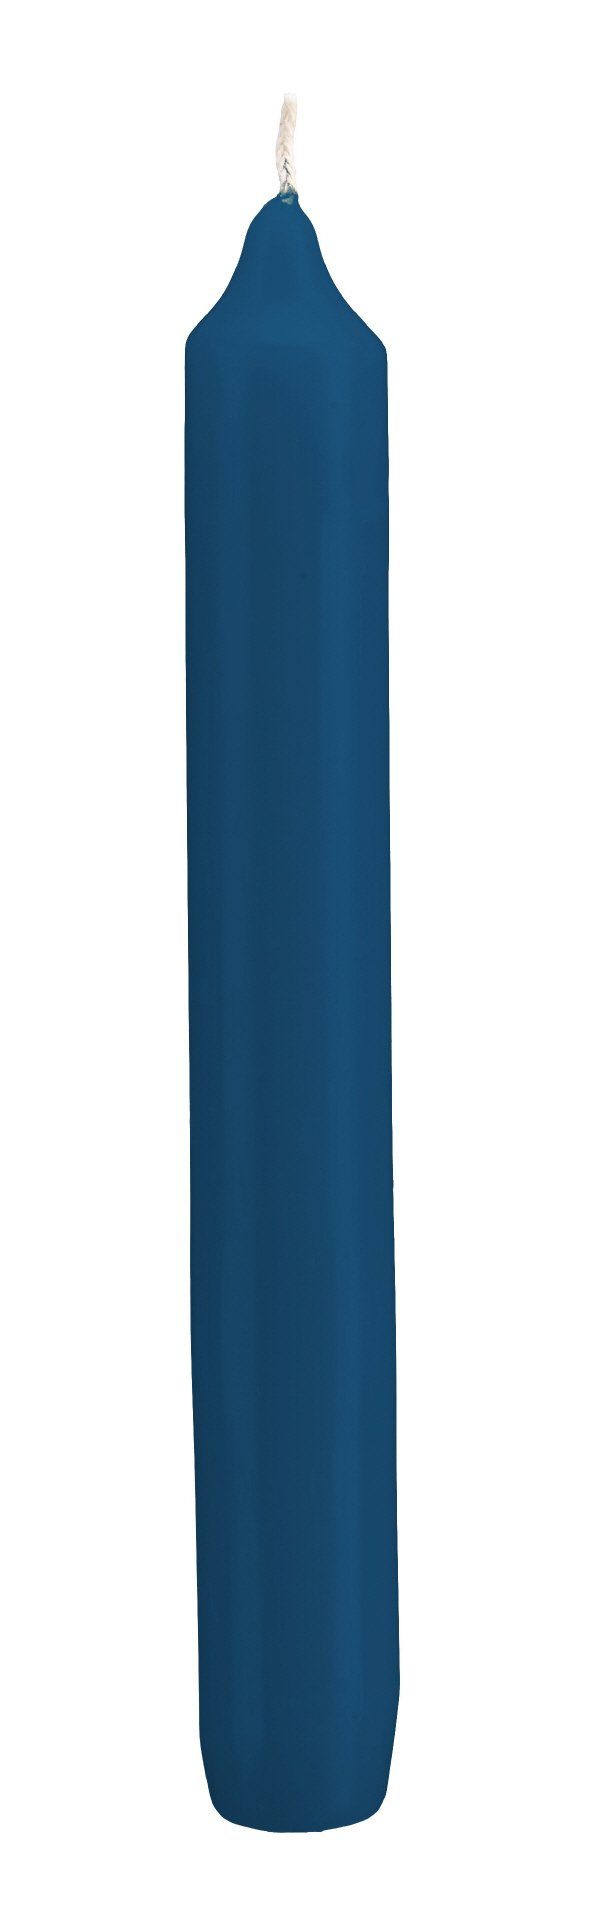 Kopschitz Kerzen Tafelkerze Leuchterkerzen Petrol Blau 190 x Ø 21 mm, 90 Stück